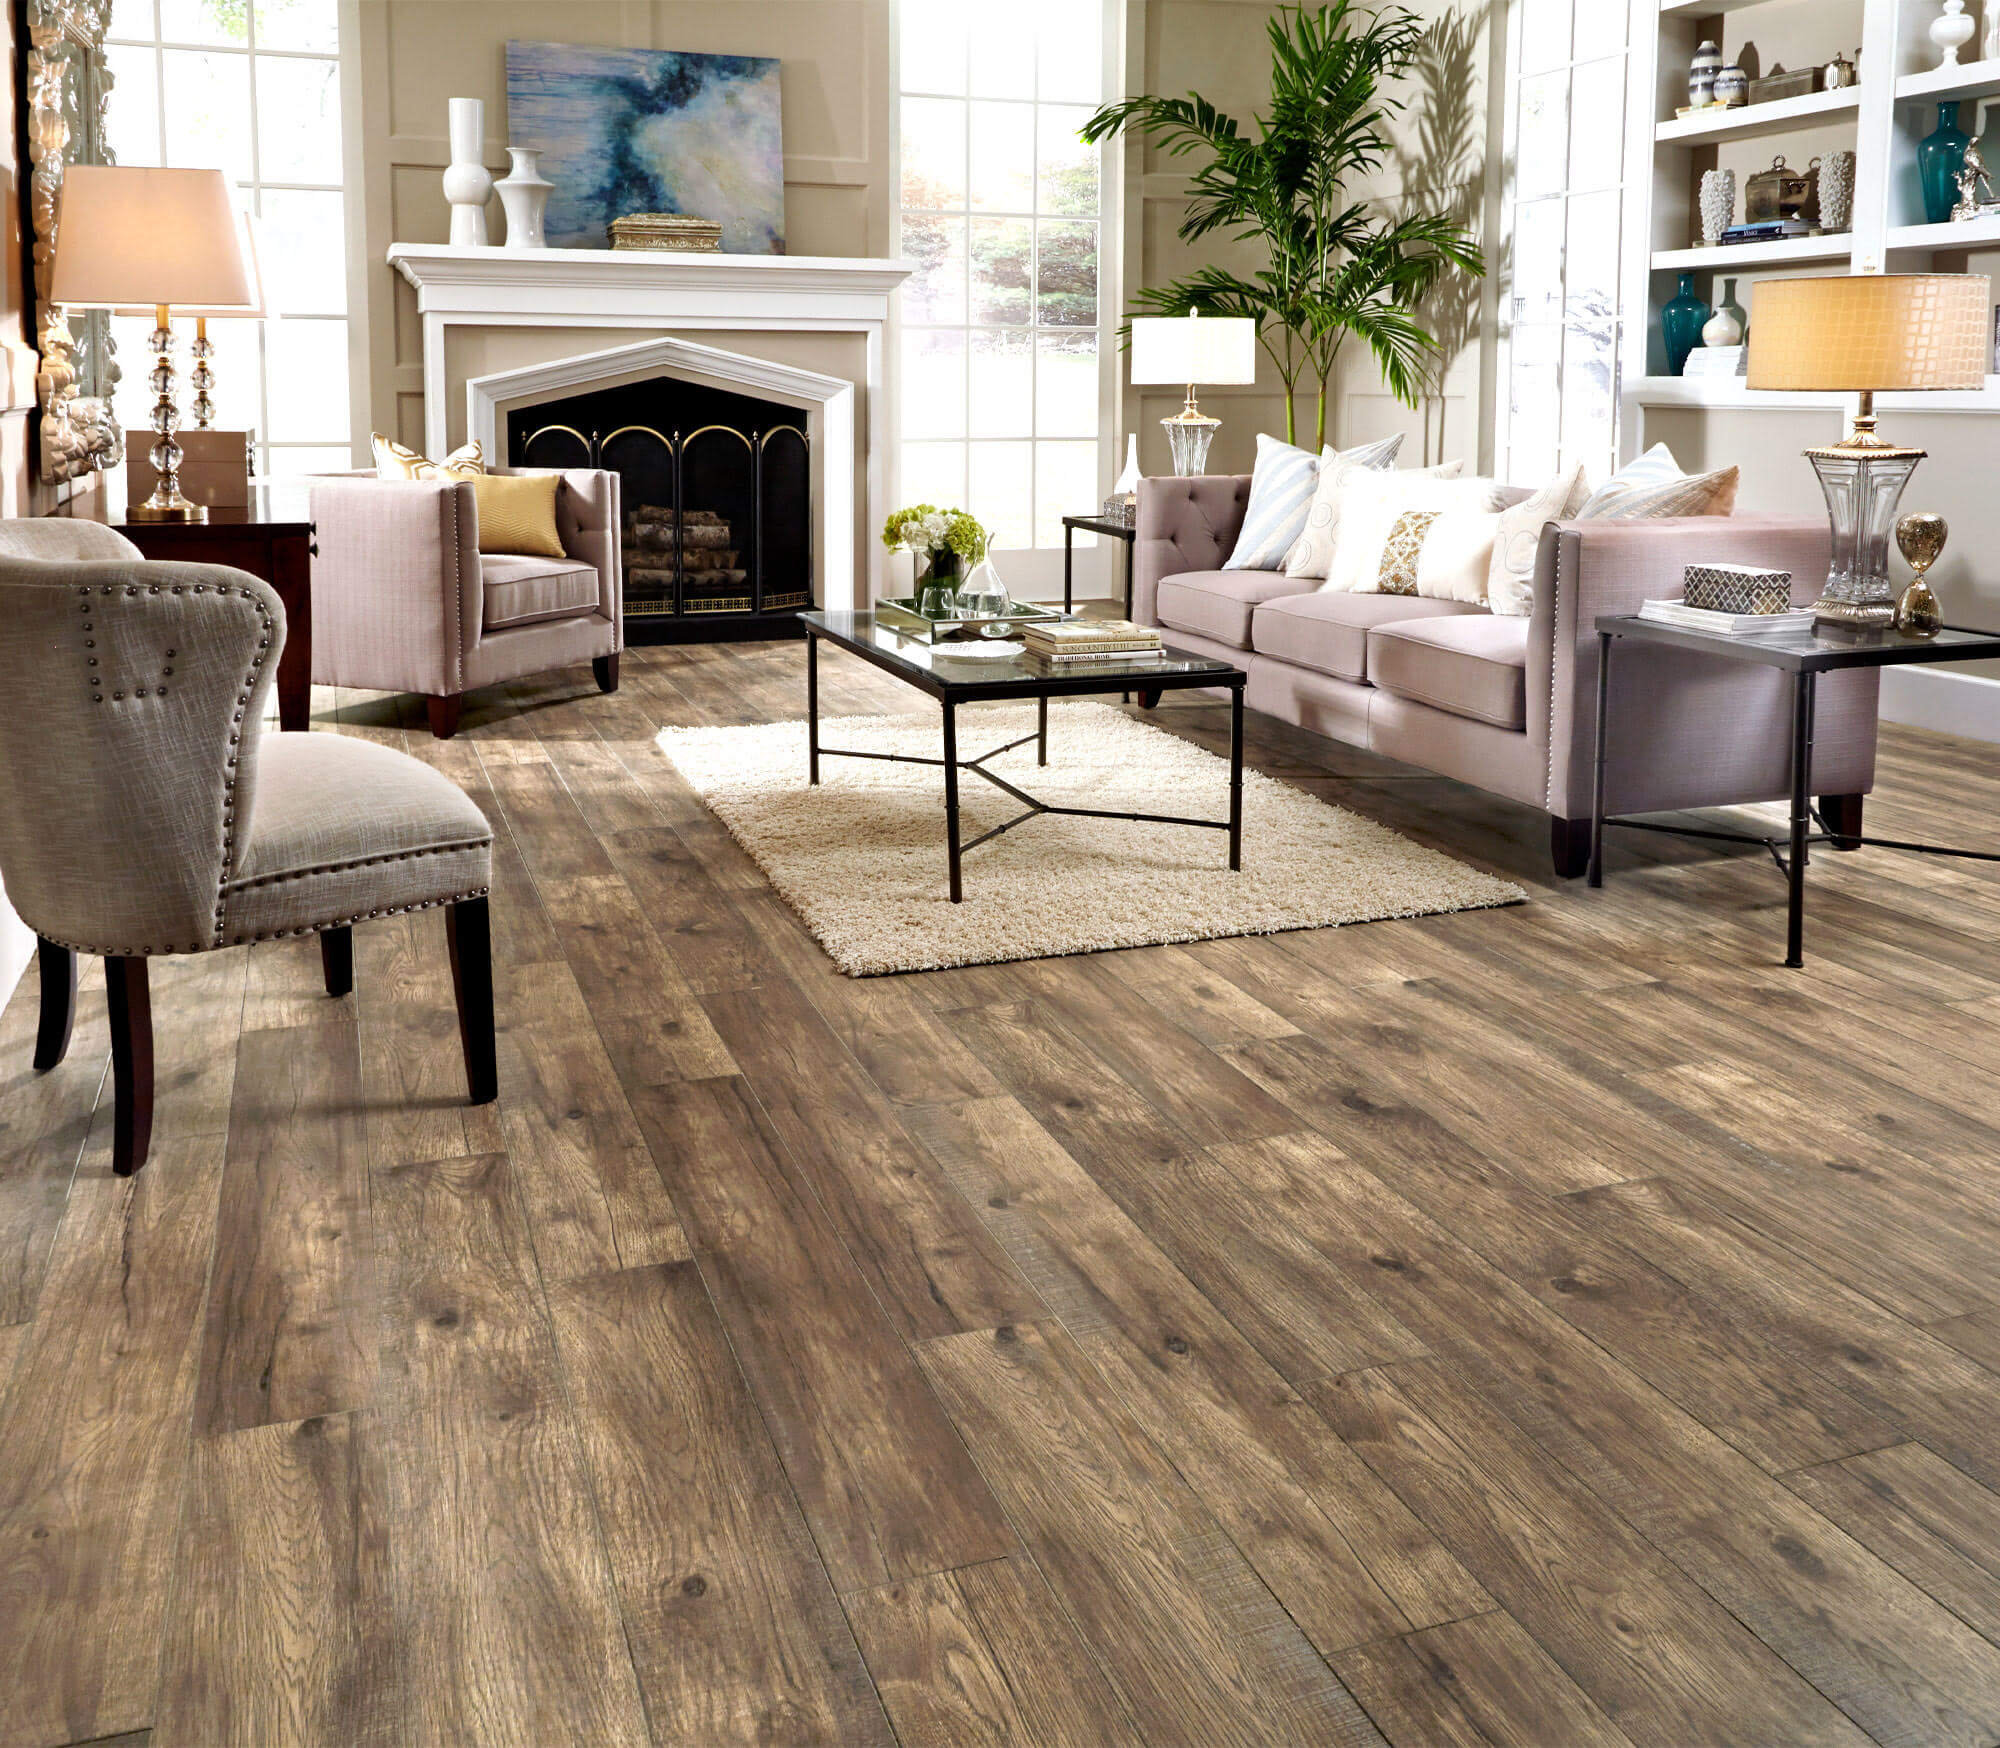 How Hardwood Flooring Increases The, Value Hardwood Flooring